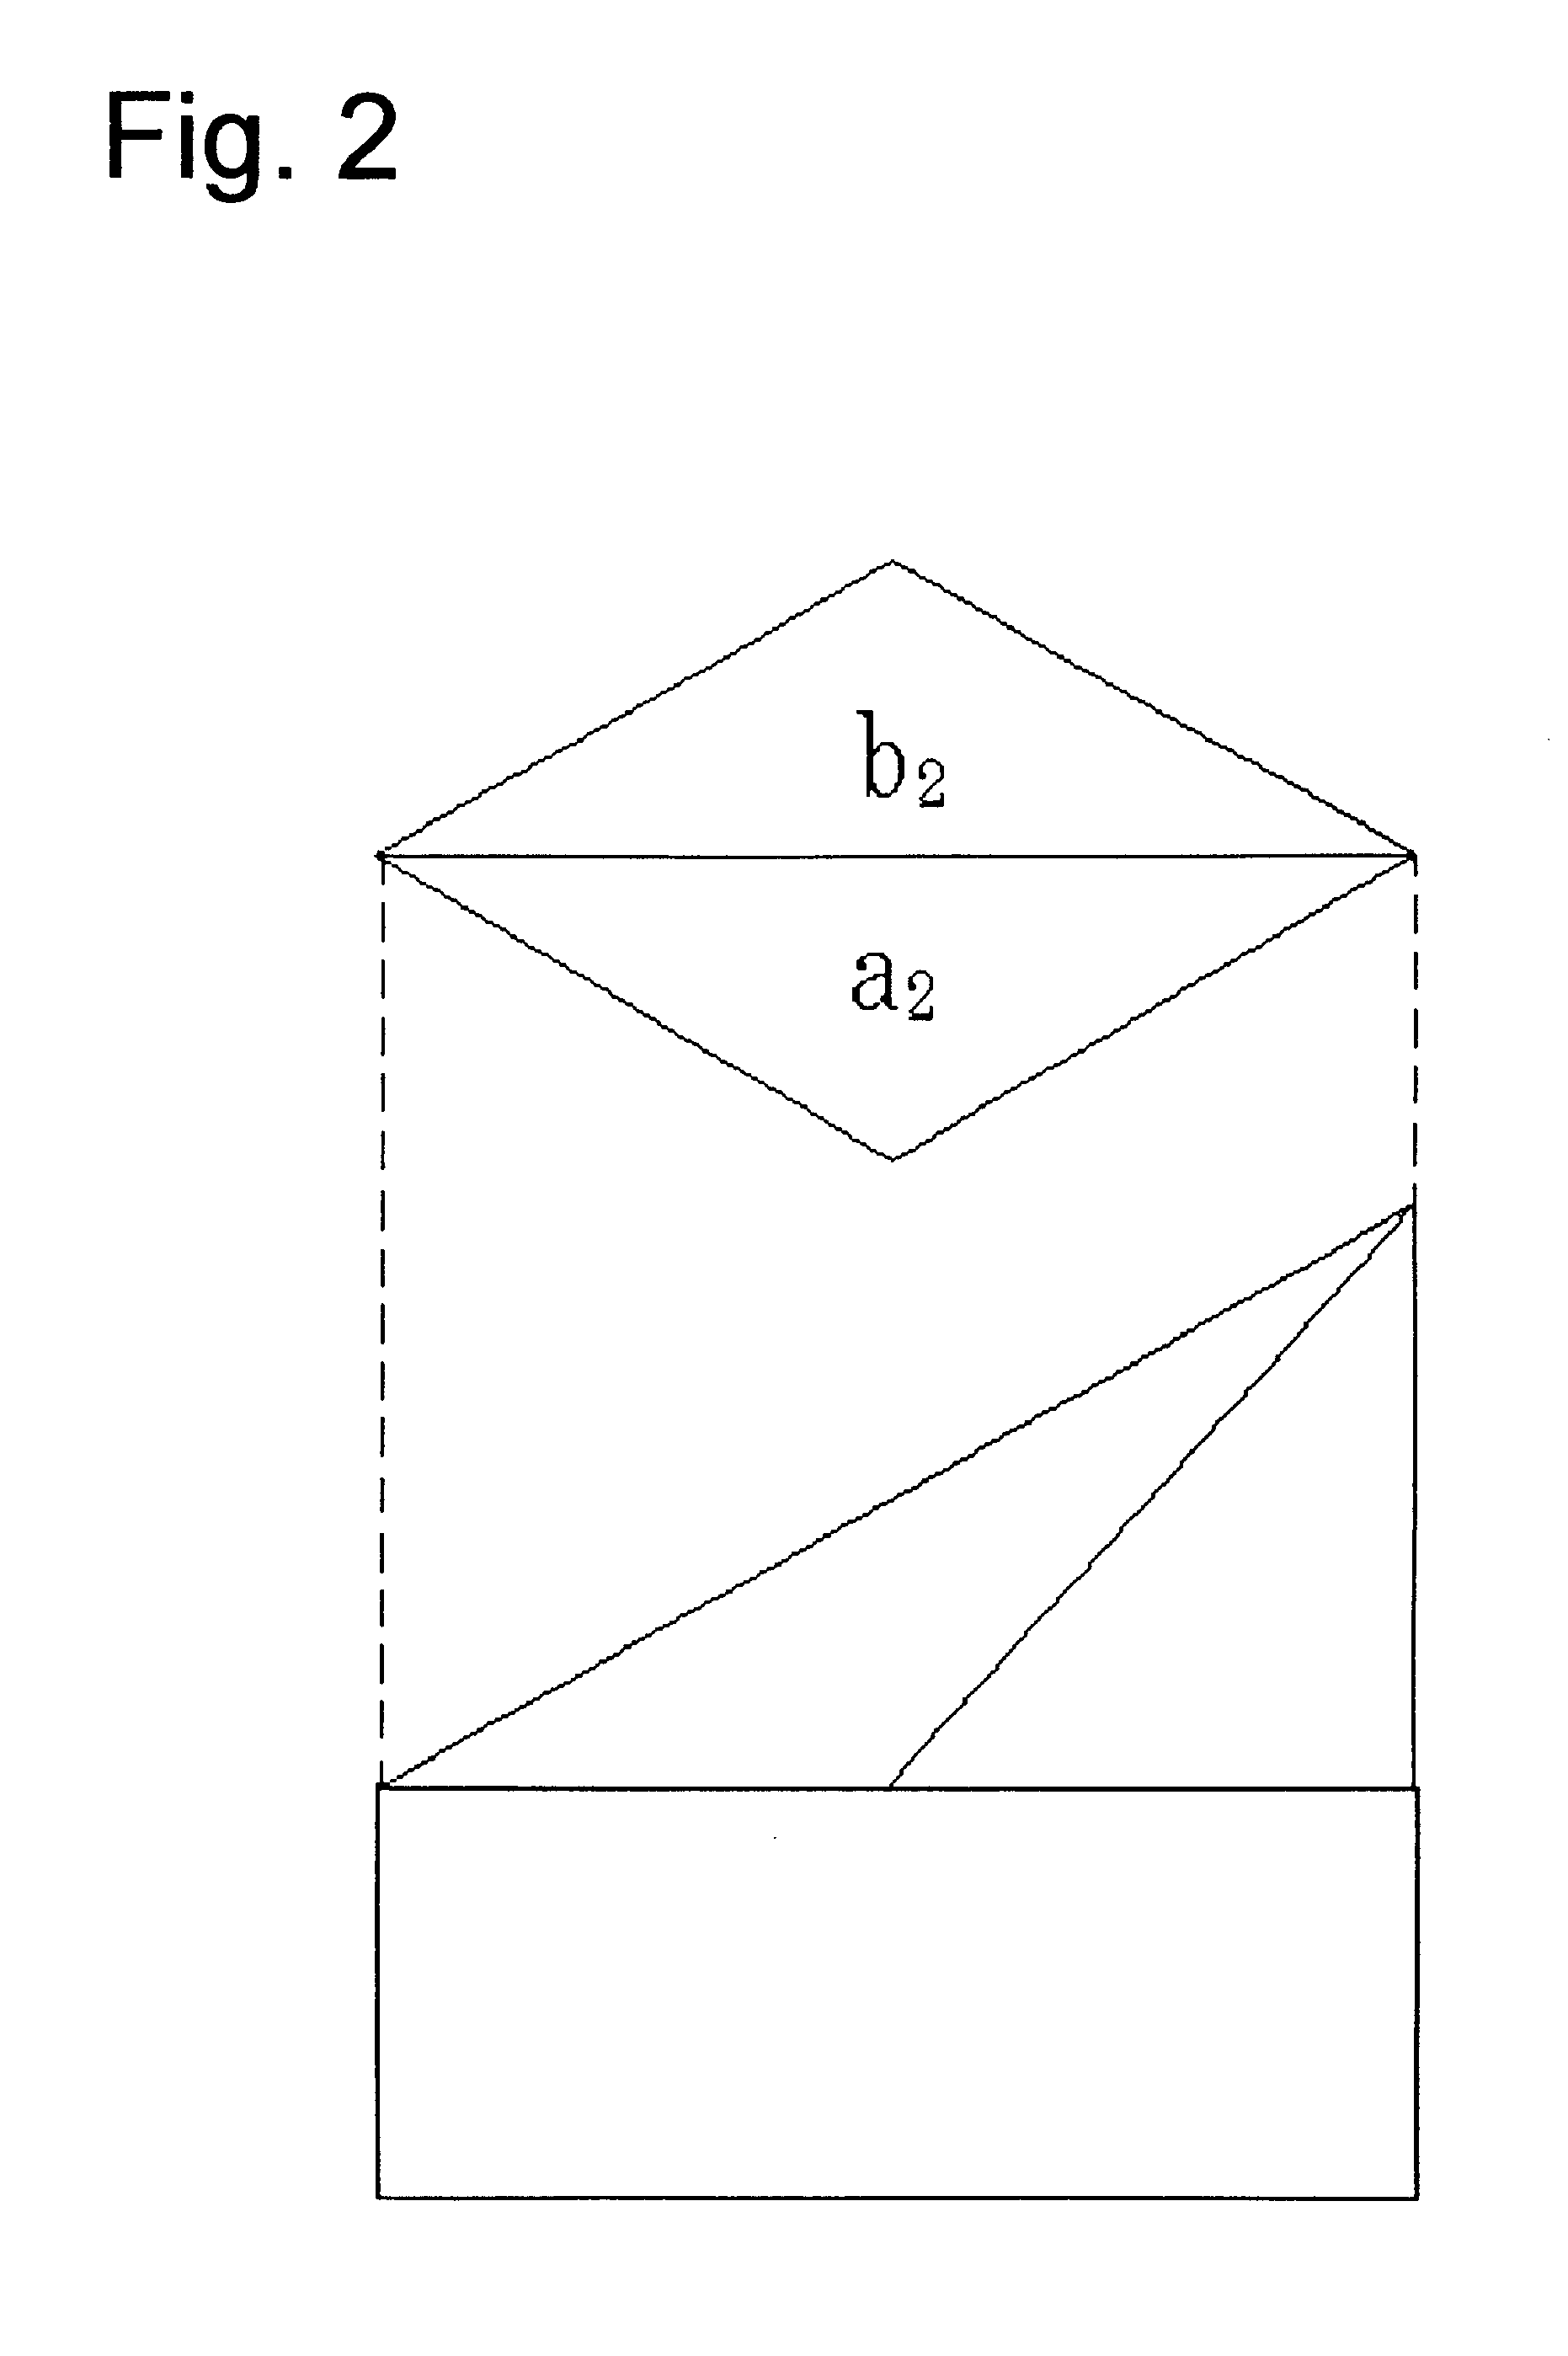 Triangular-pyramidal cube-corner retro-reflective sheeting